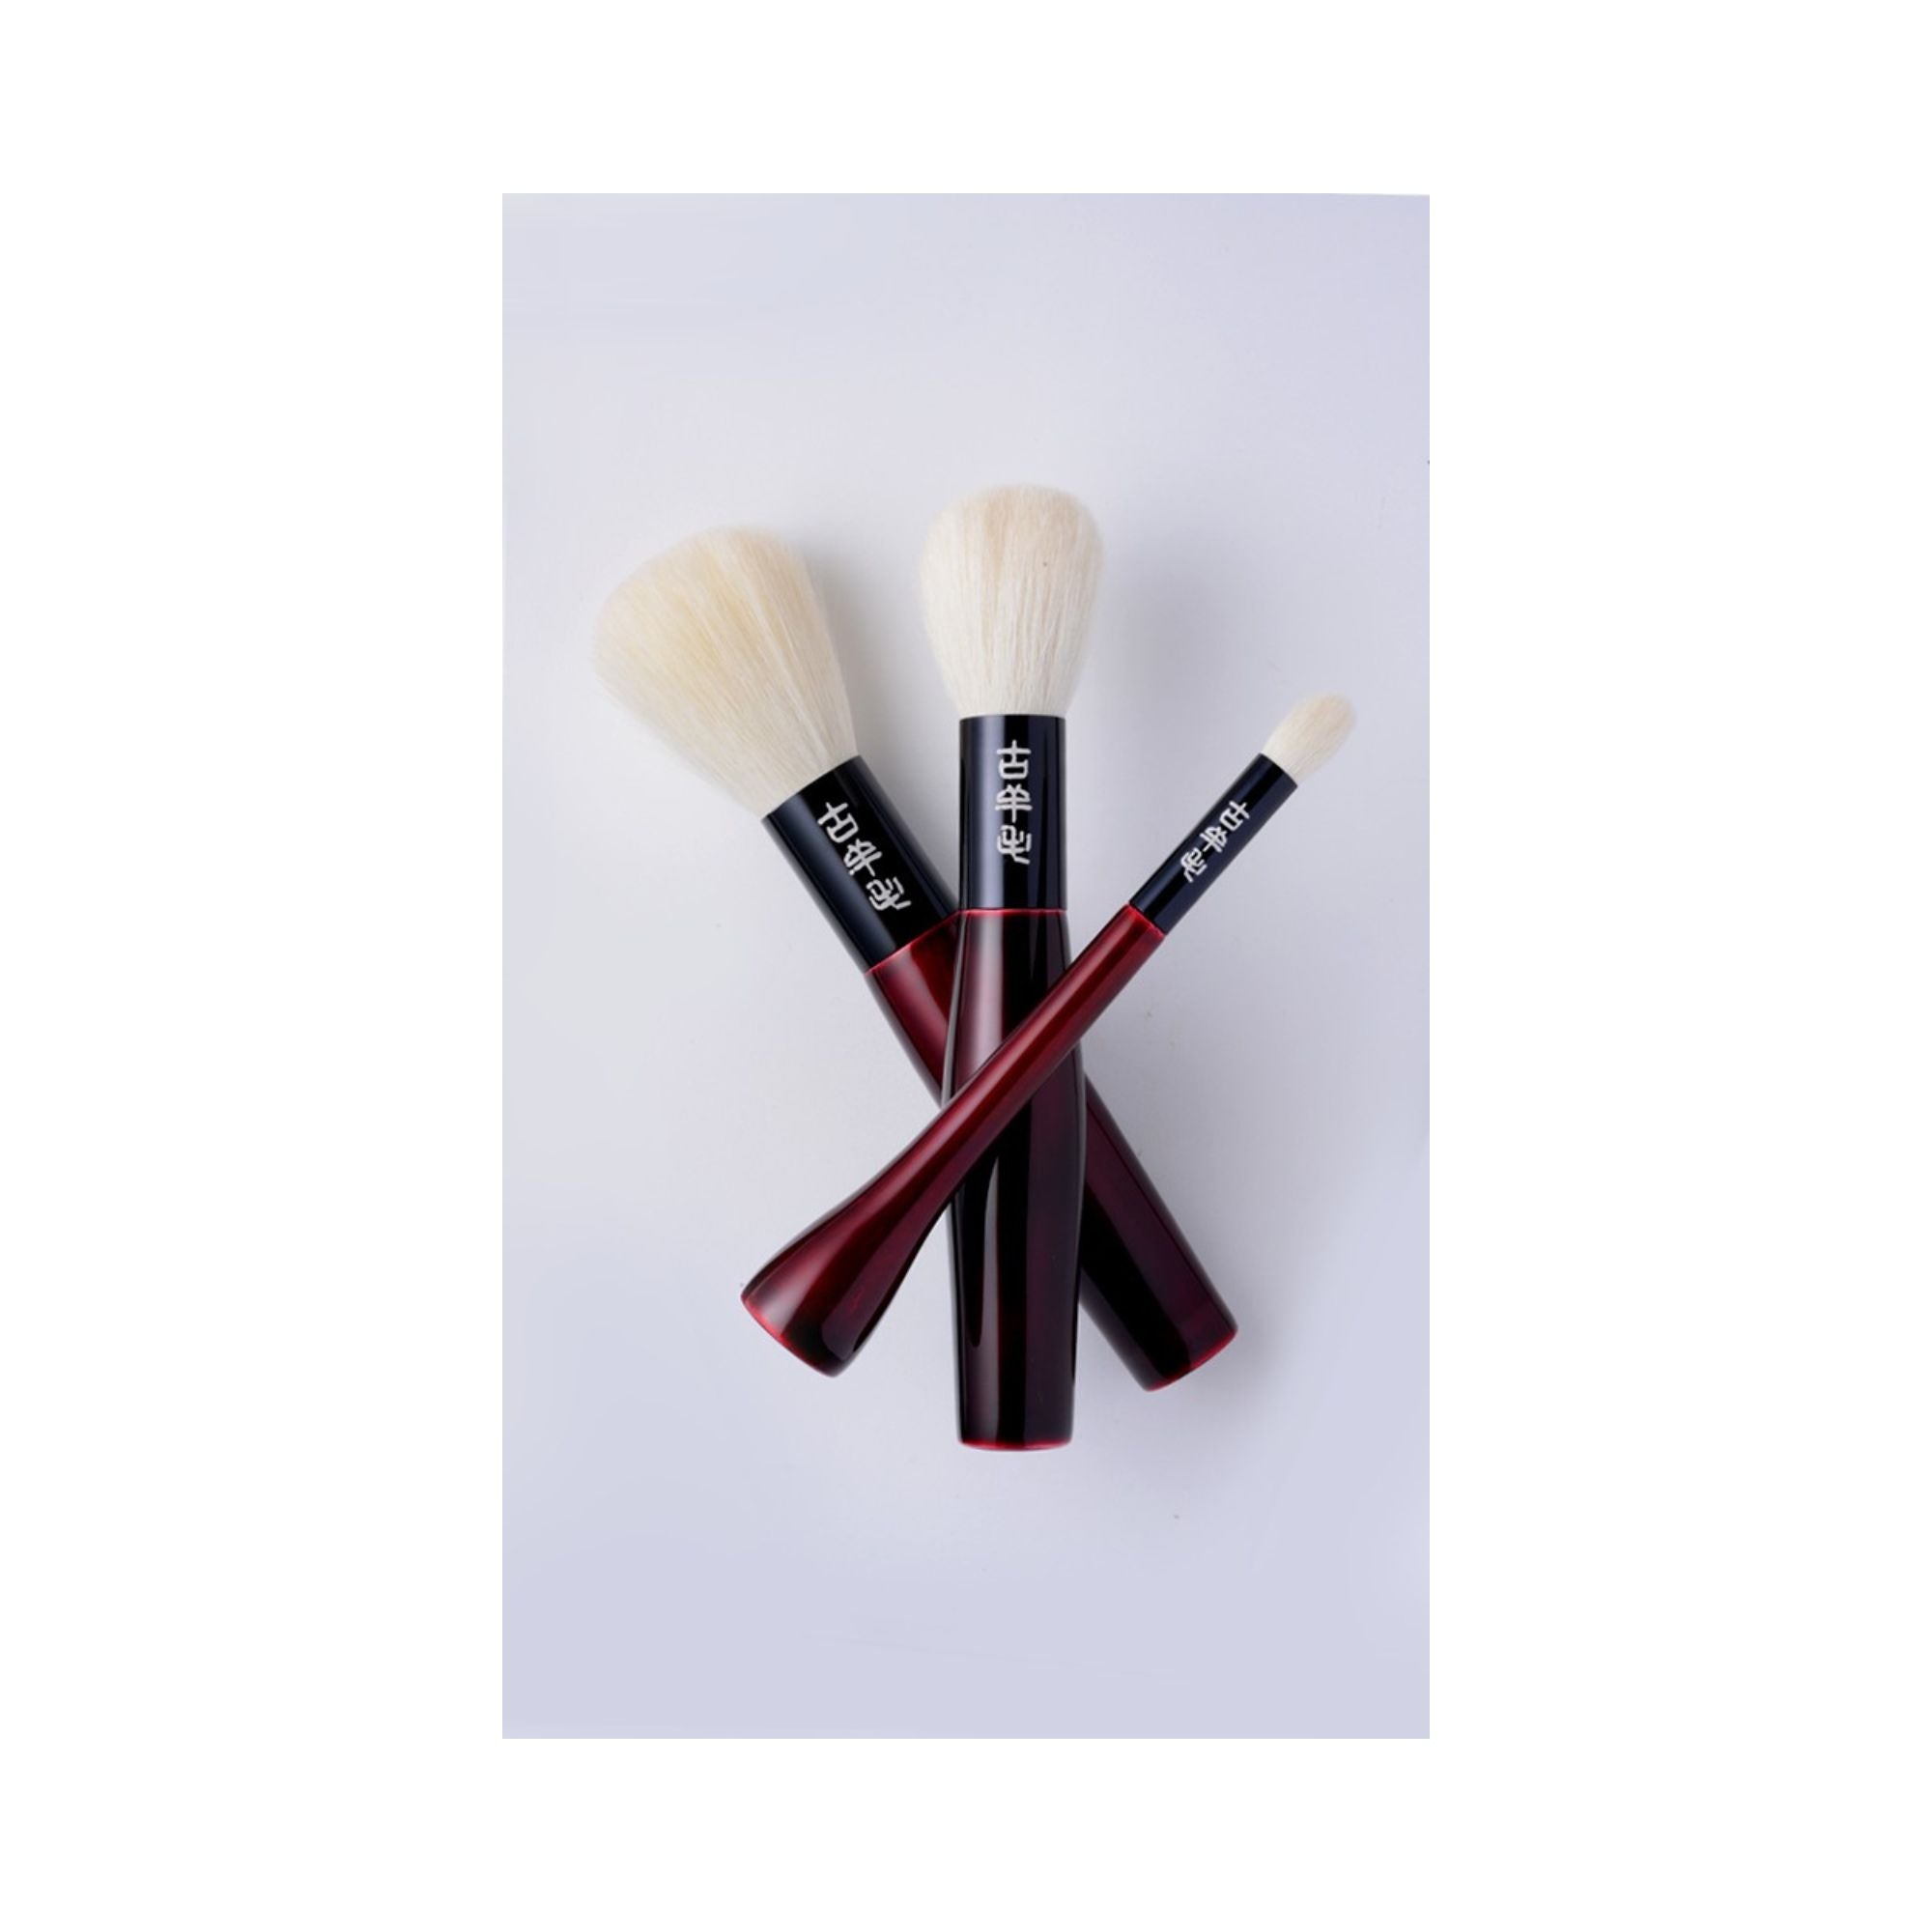 Koyomo Tsuki Hana-nuri 3-Brush Set - Fude Beauty, Japanese Makeup Brushes